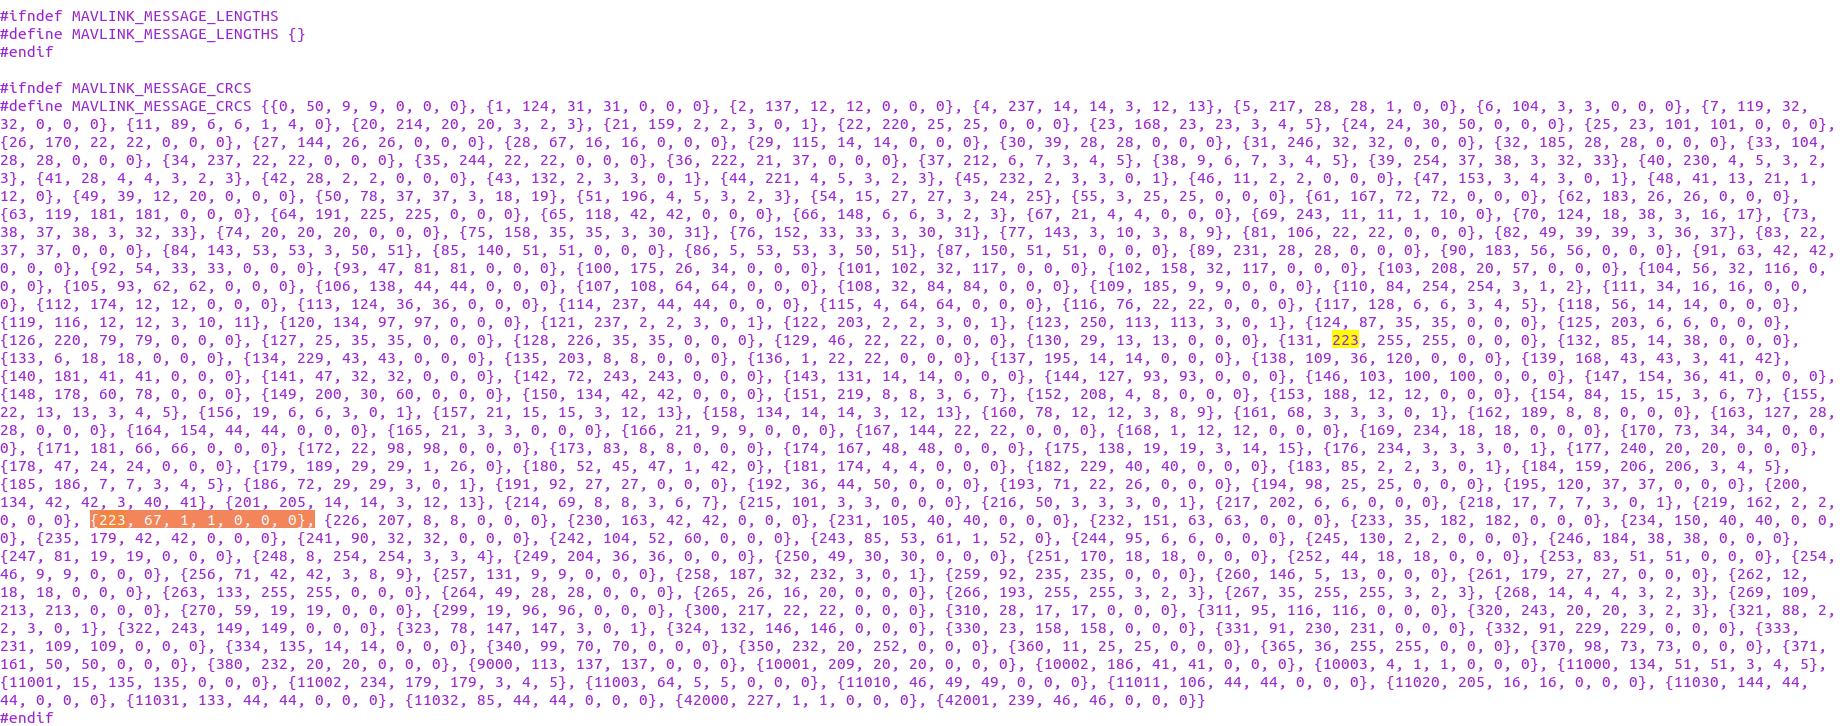 qgc 解析apm飞控新定义的mavlink消息(ubuntu) - 文章图片